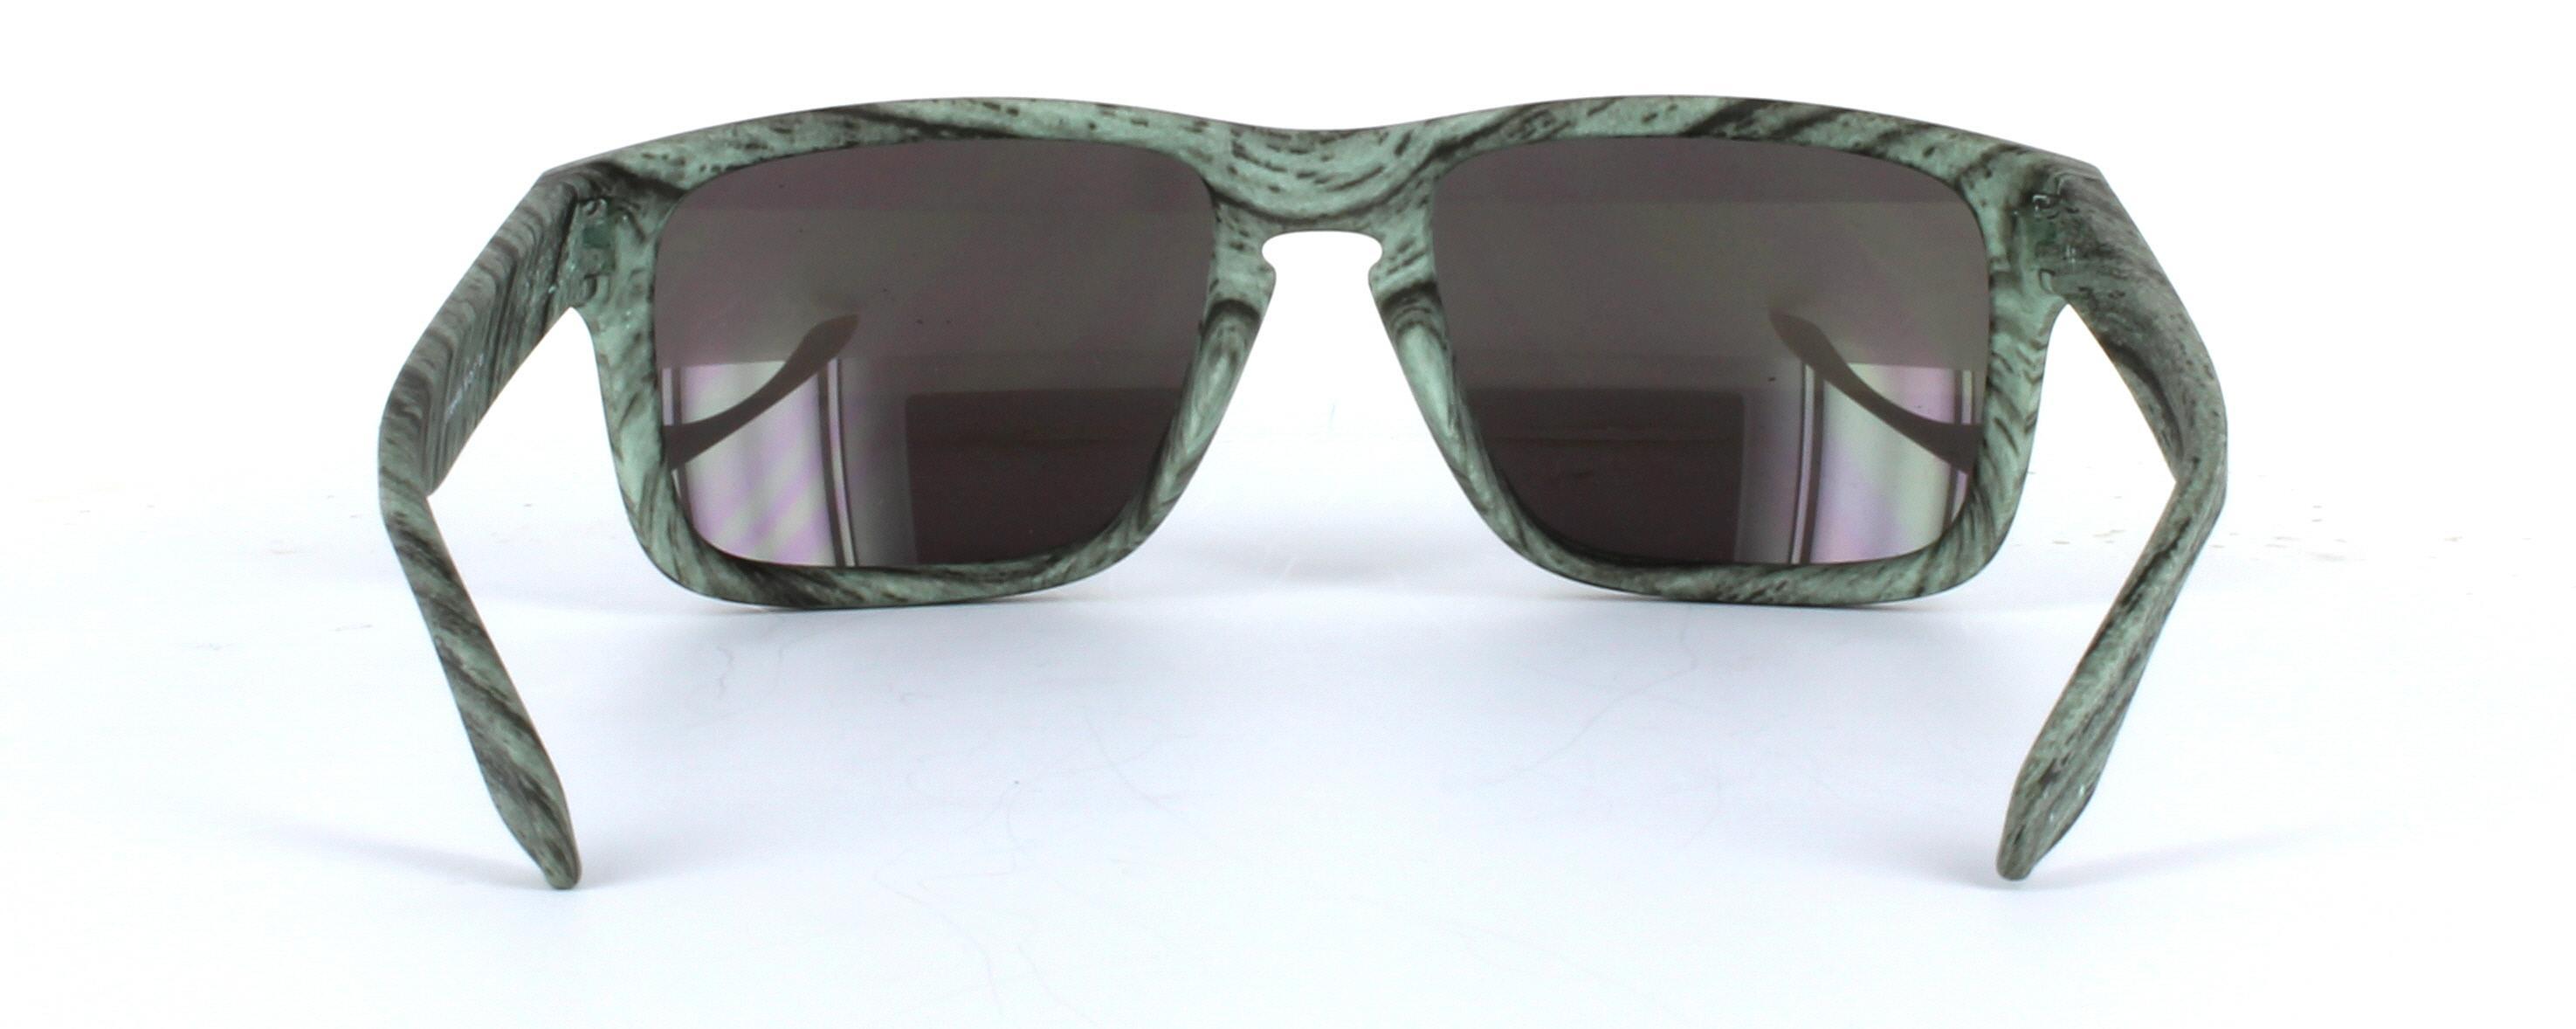 Oakley Ivywood Grey Full Rim Plastic Sunglasses - Image View 3